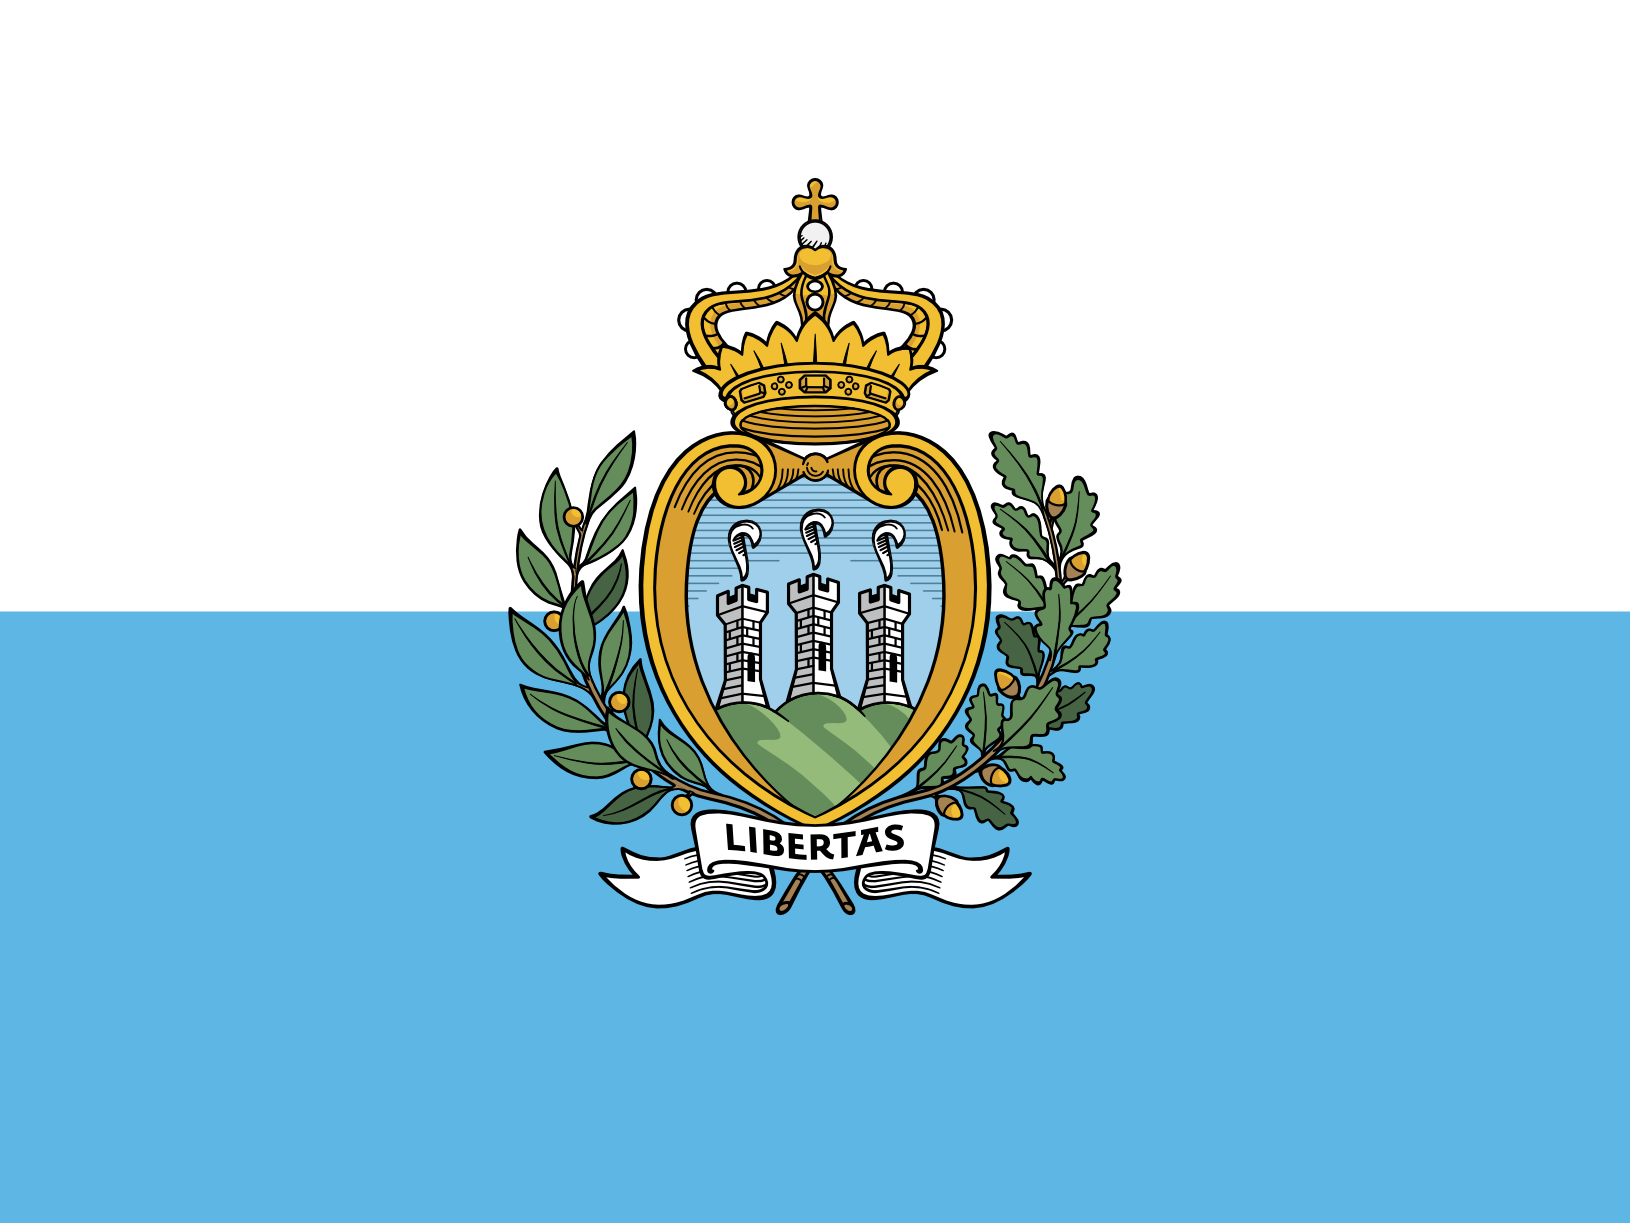 Podoba nacionalno zastavo države San Marino v resoluciji 1630x1223